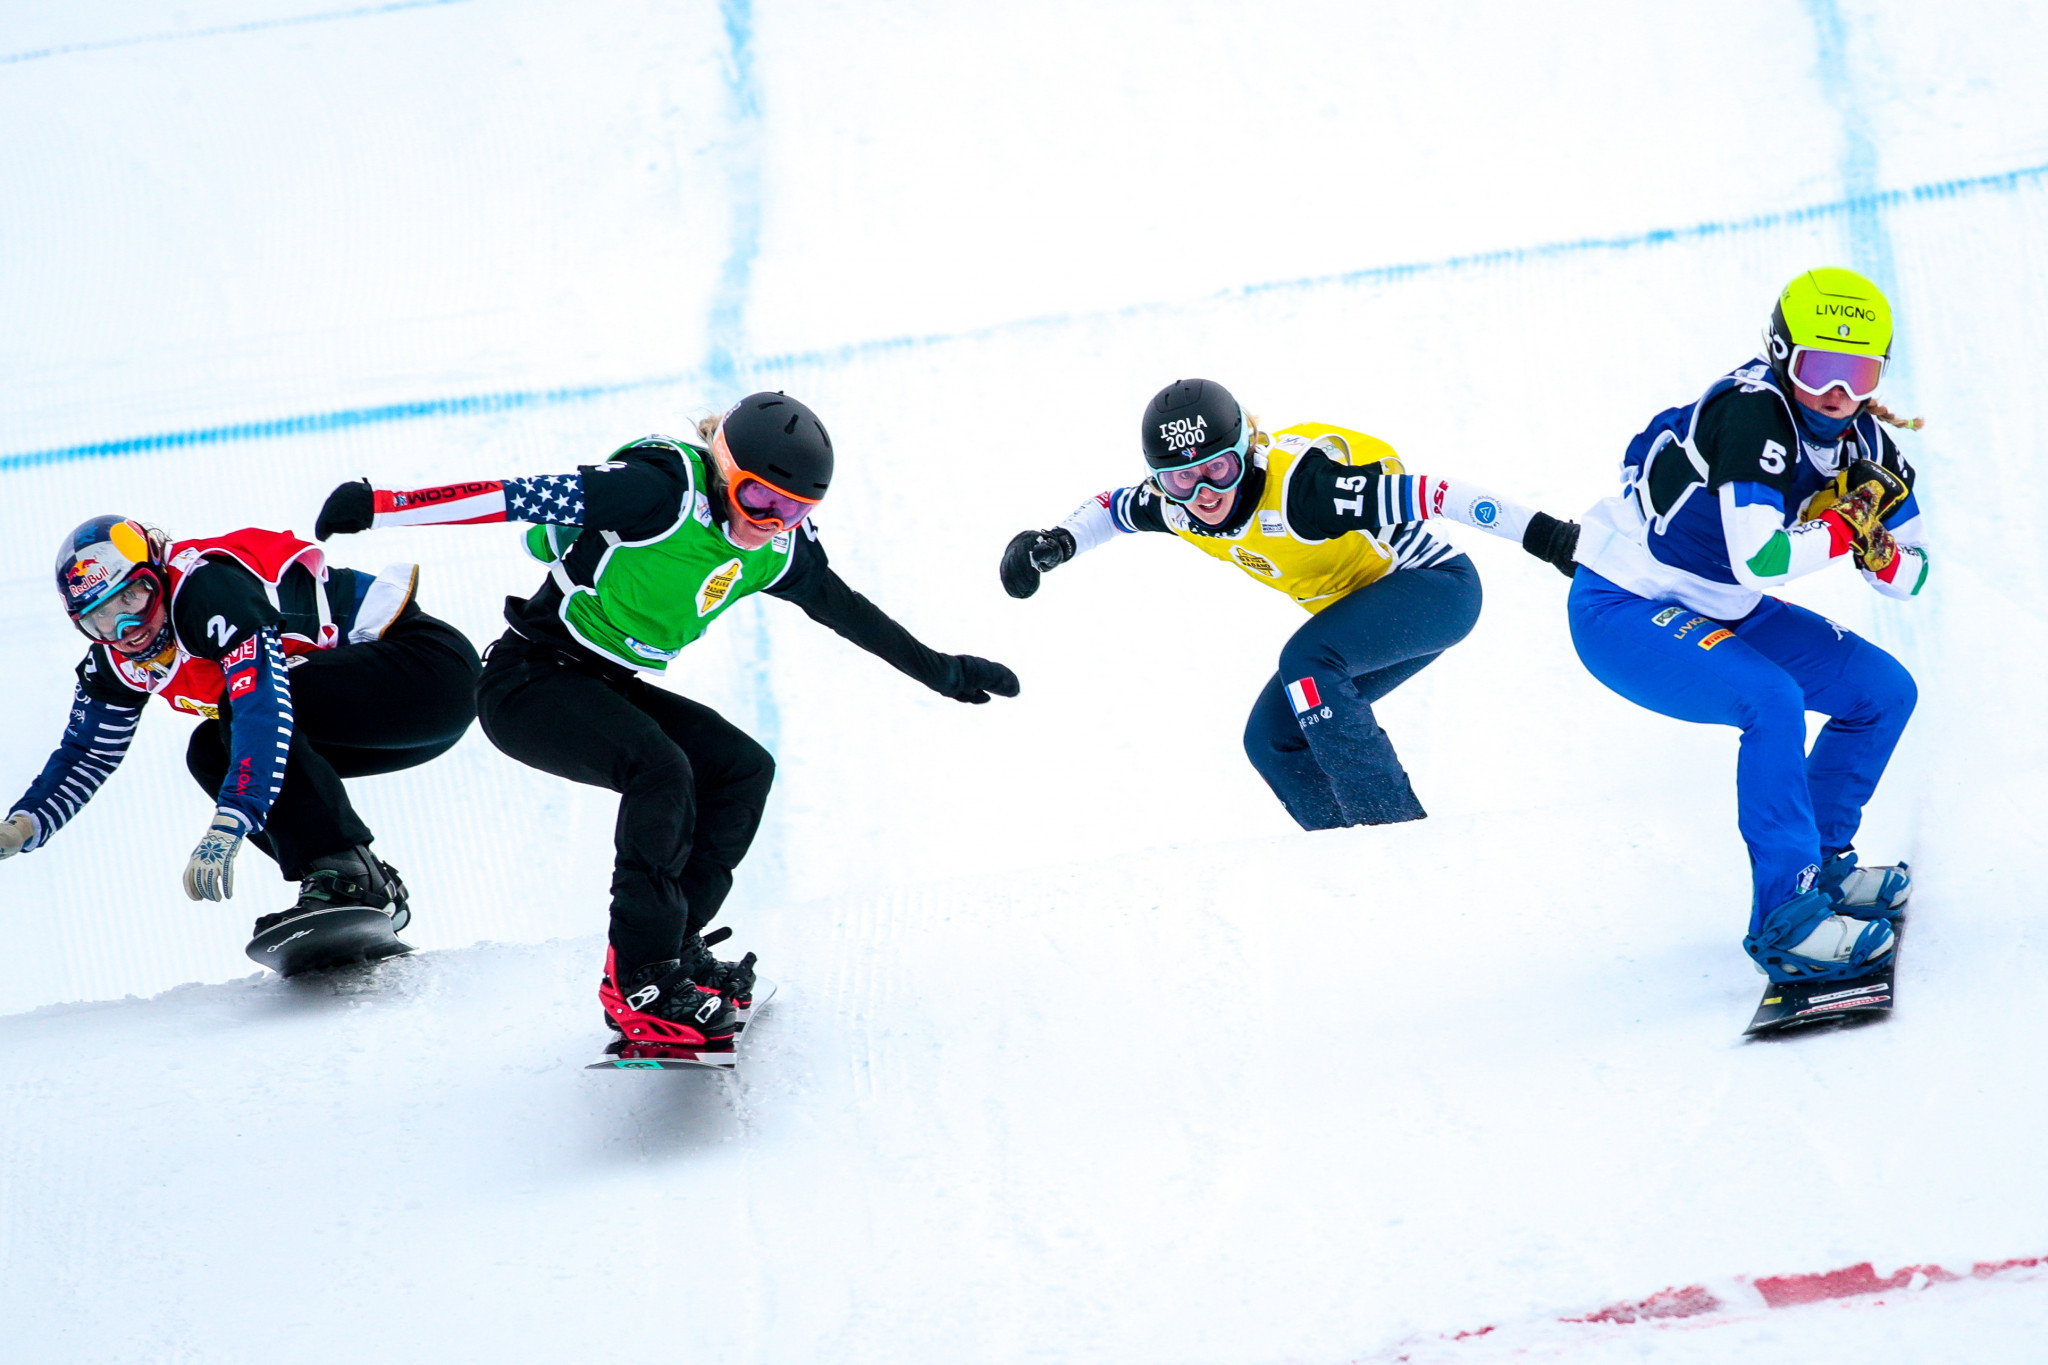 Moioli and Samková level on points entering Snowboard Cross World Cup finale